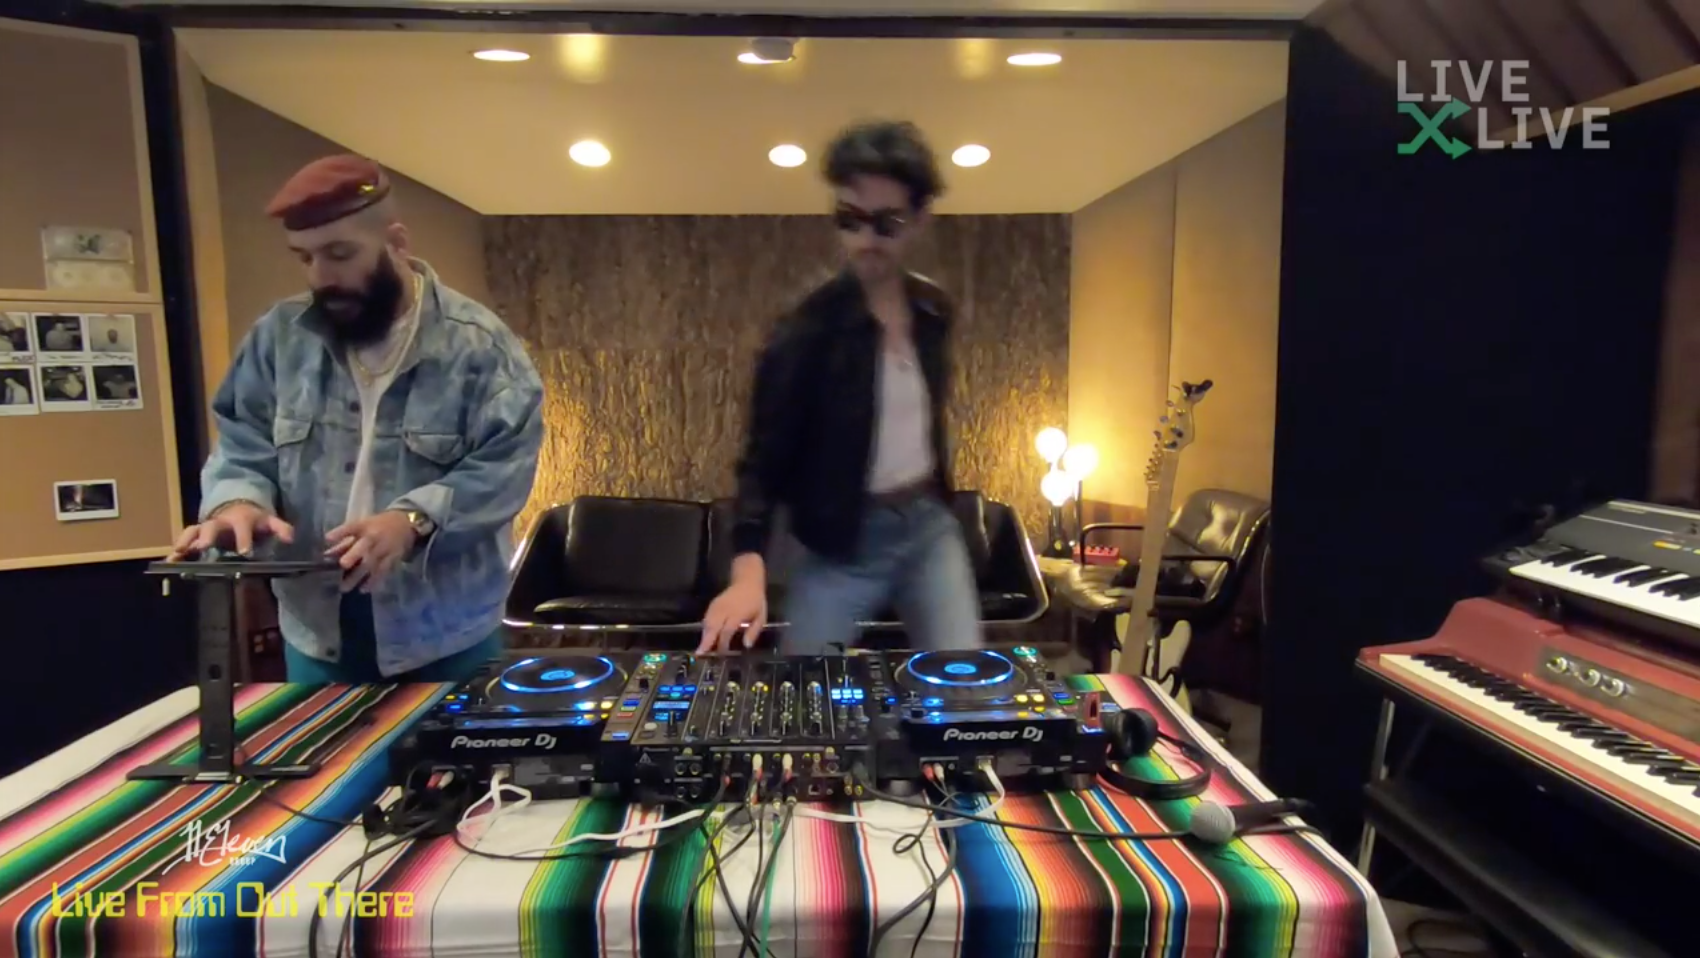 Chromeo (DJ Set) @chromeo performing from their studio.